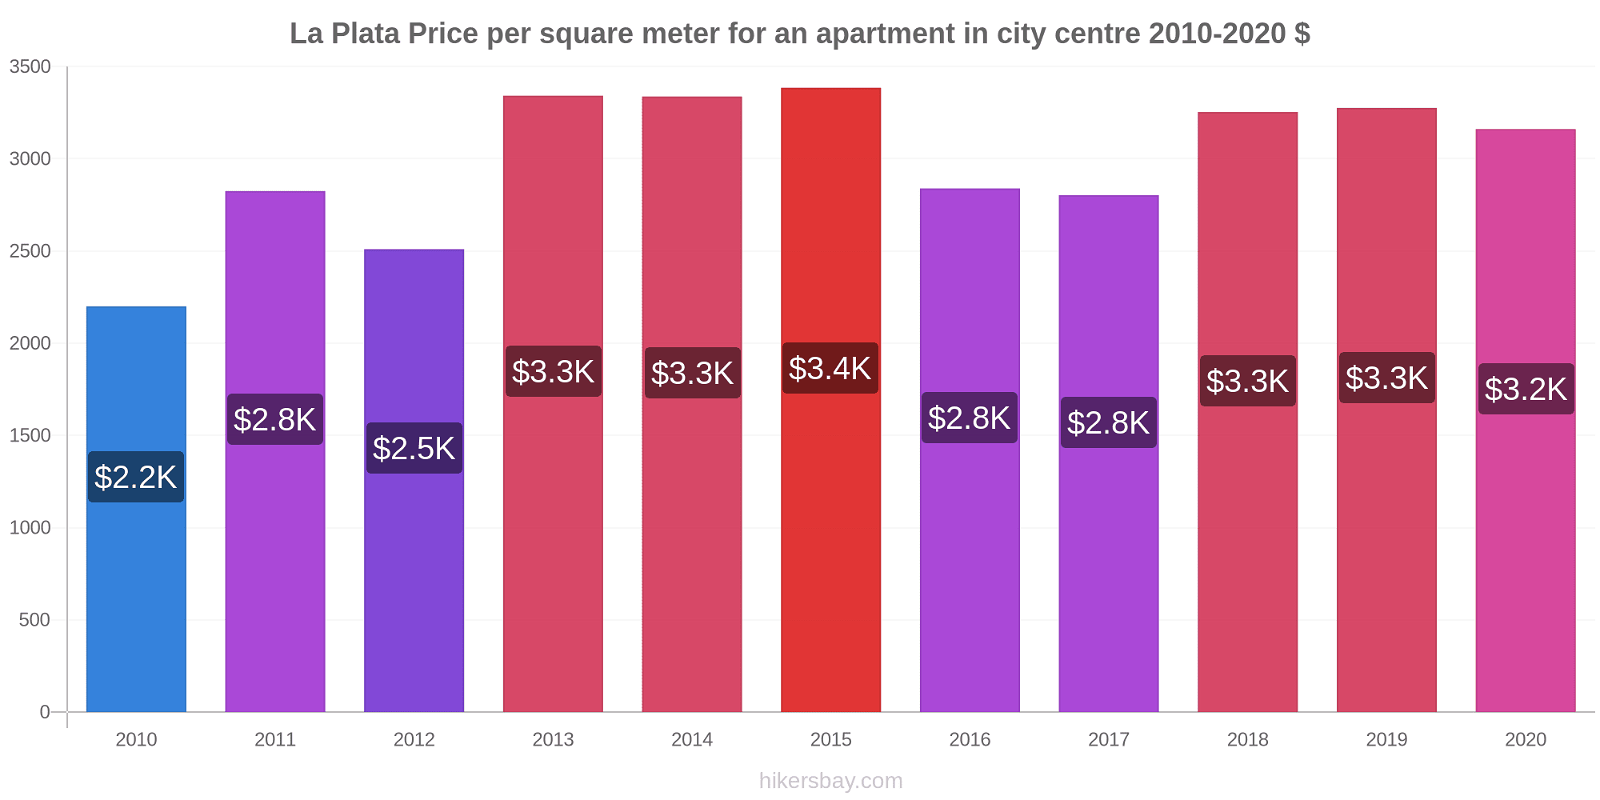 La Plata price changes Price per square meter for an apartment in city centre hikersbay.com